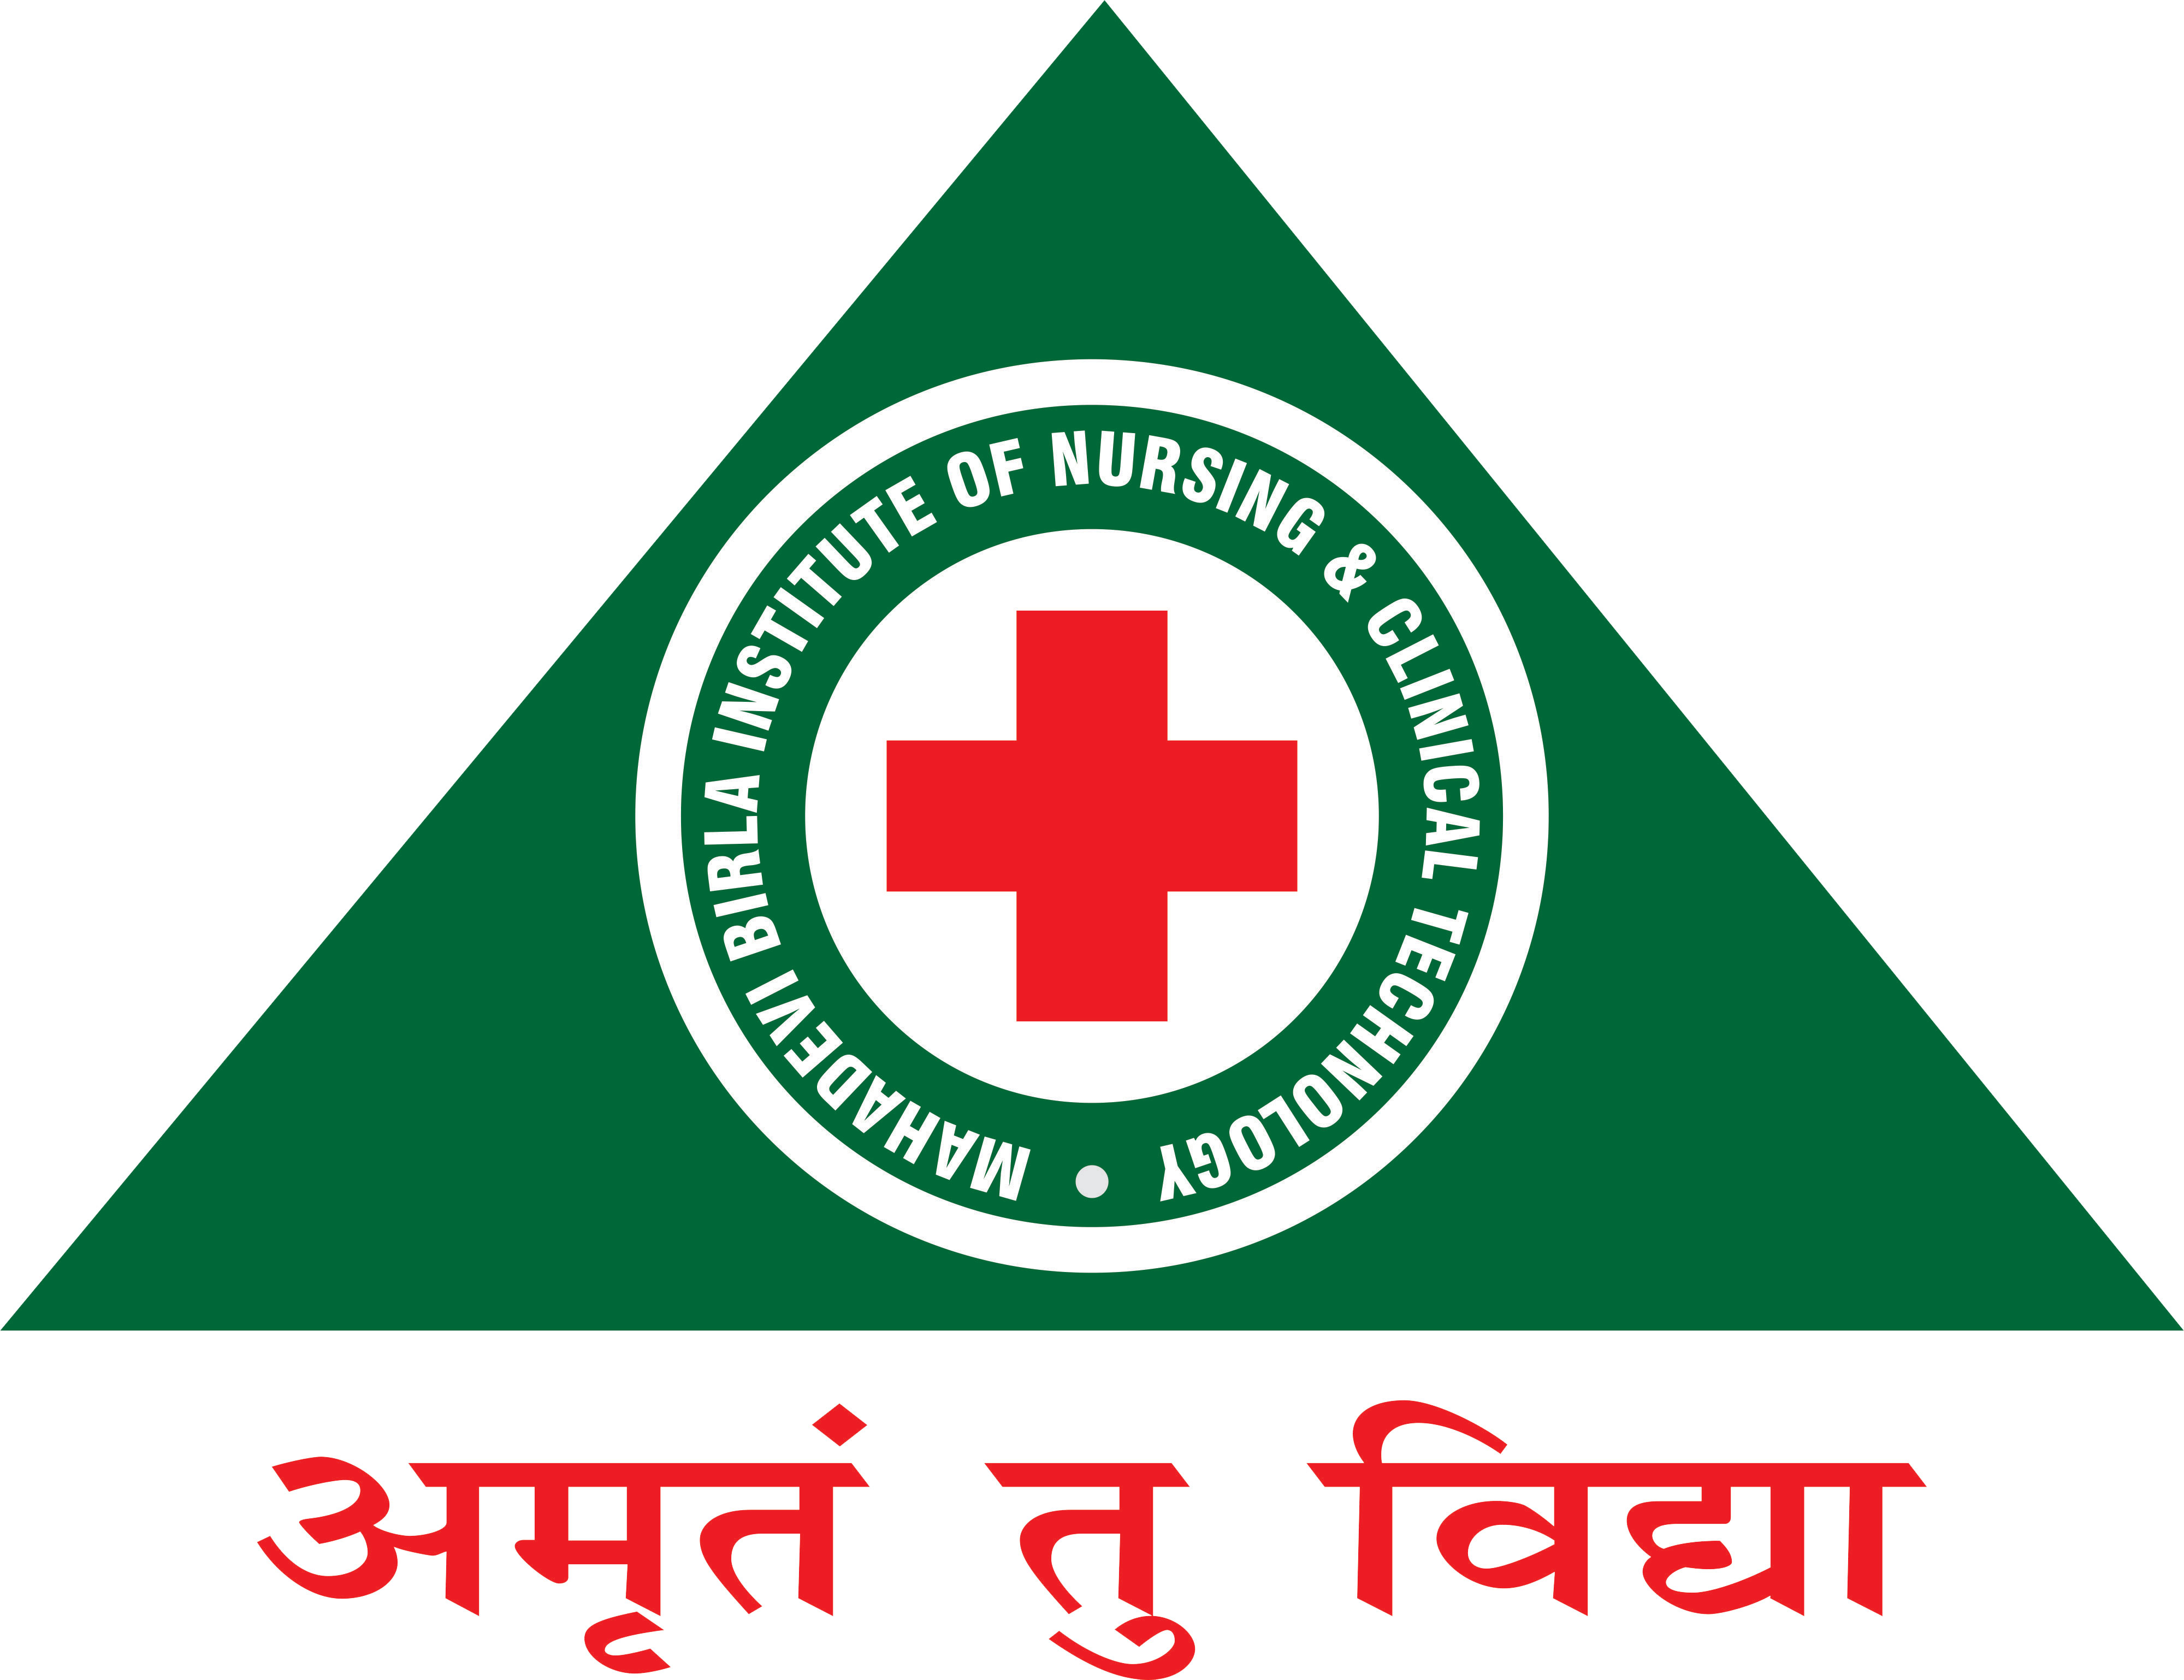 Mahadevi Birla Institute of Nursing and Clinical Technology